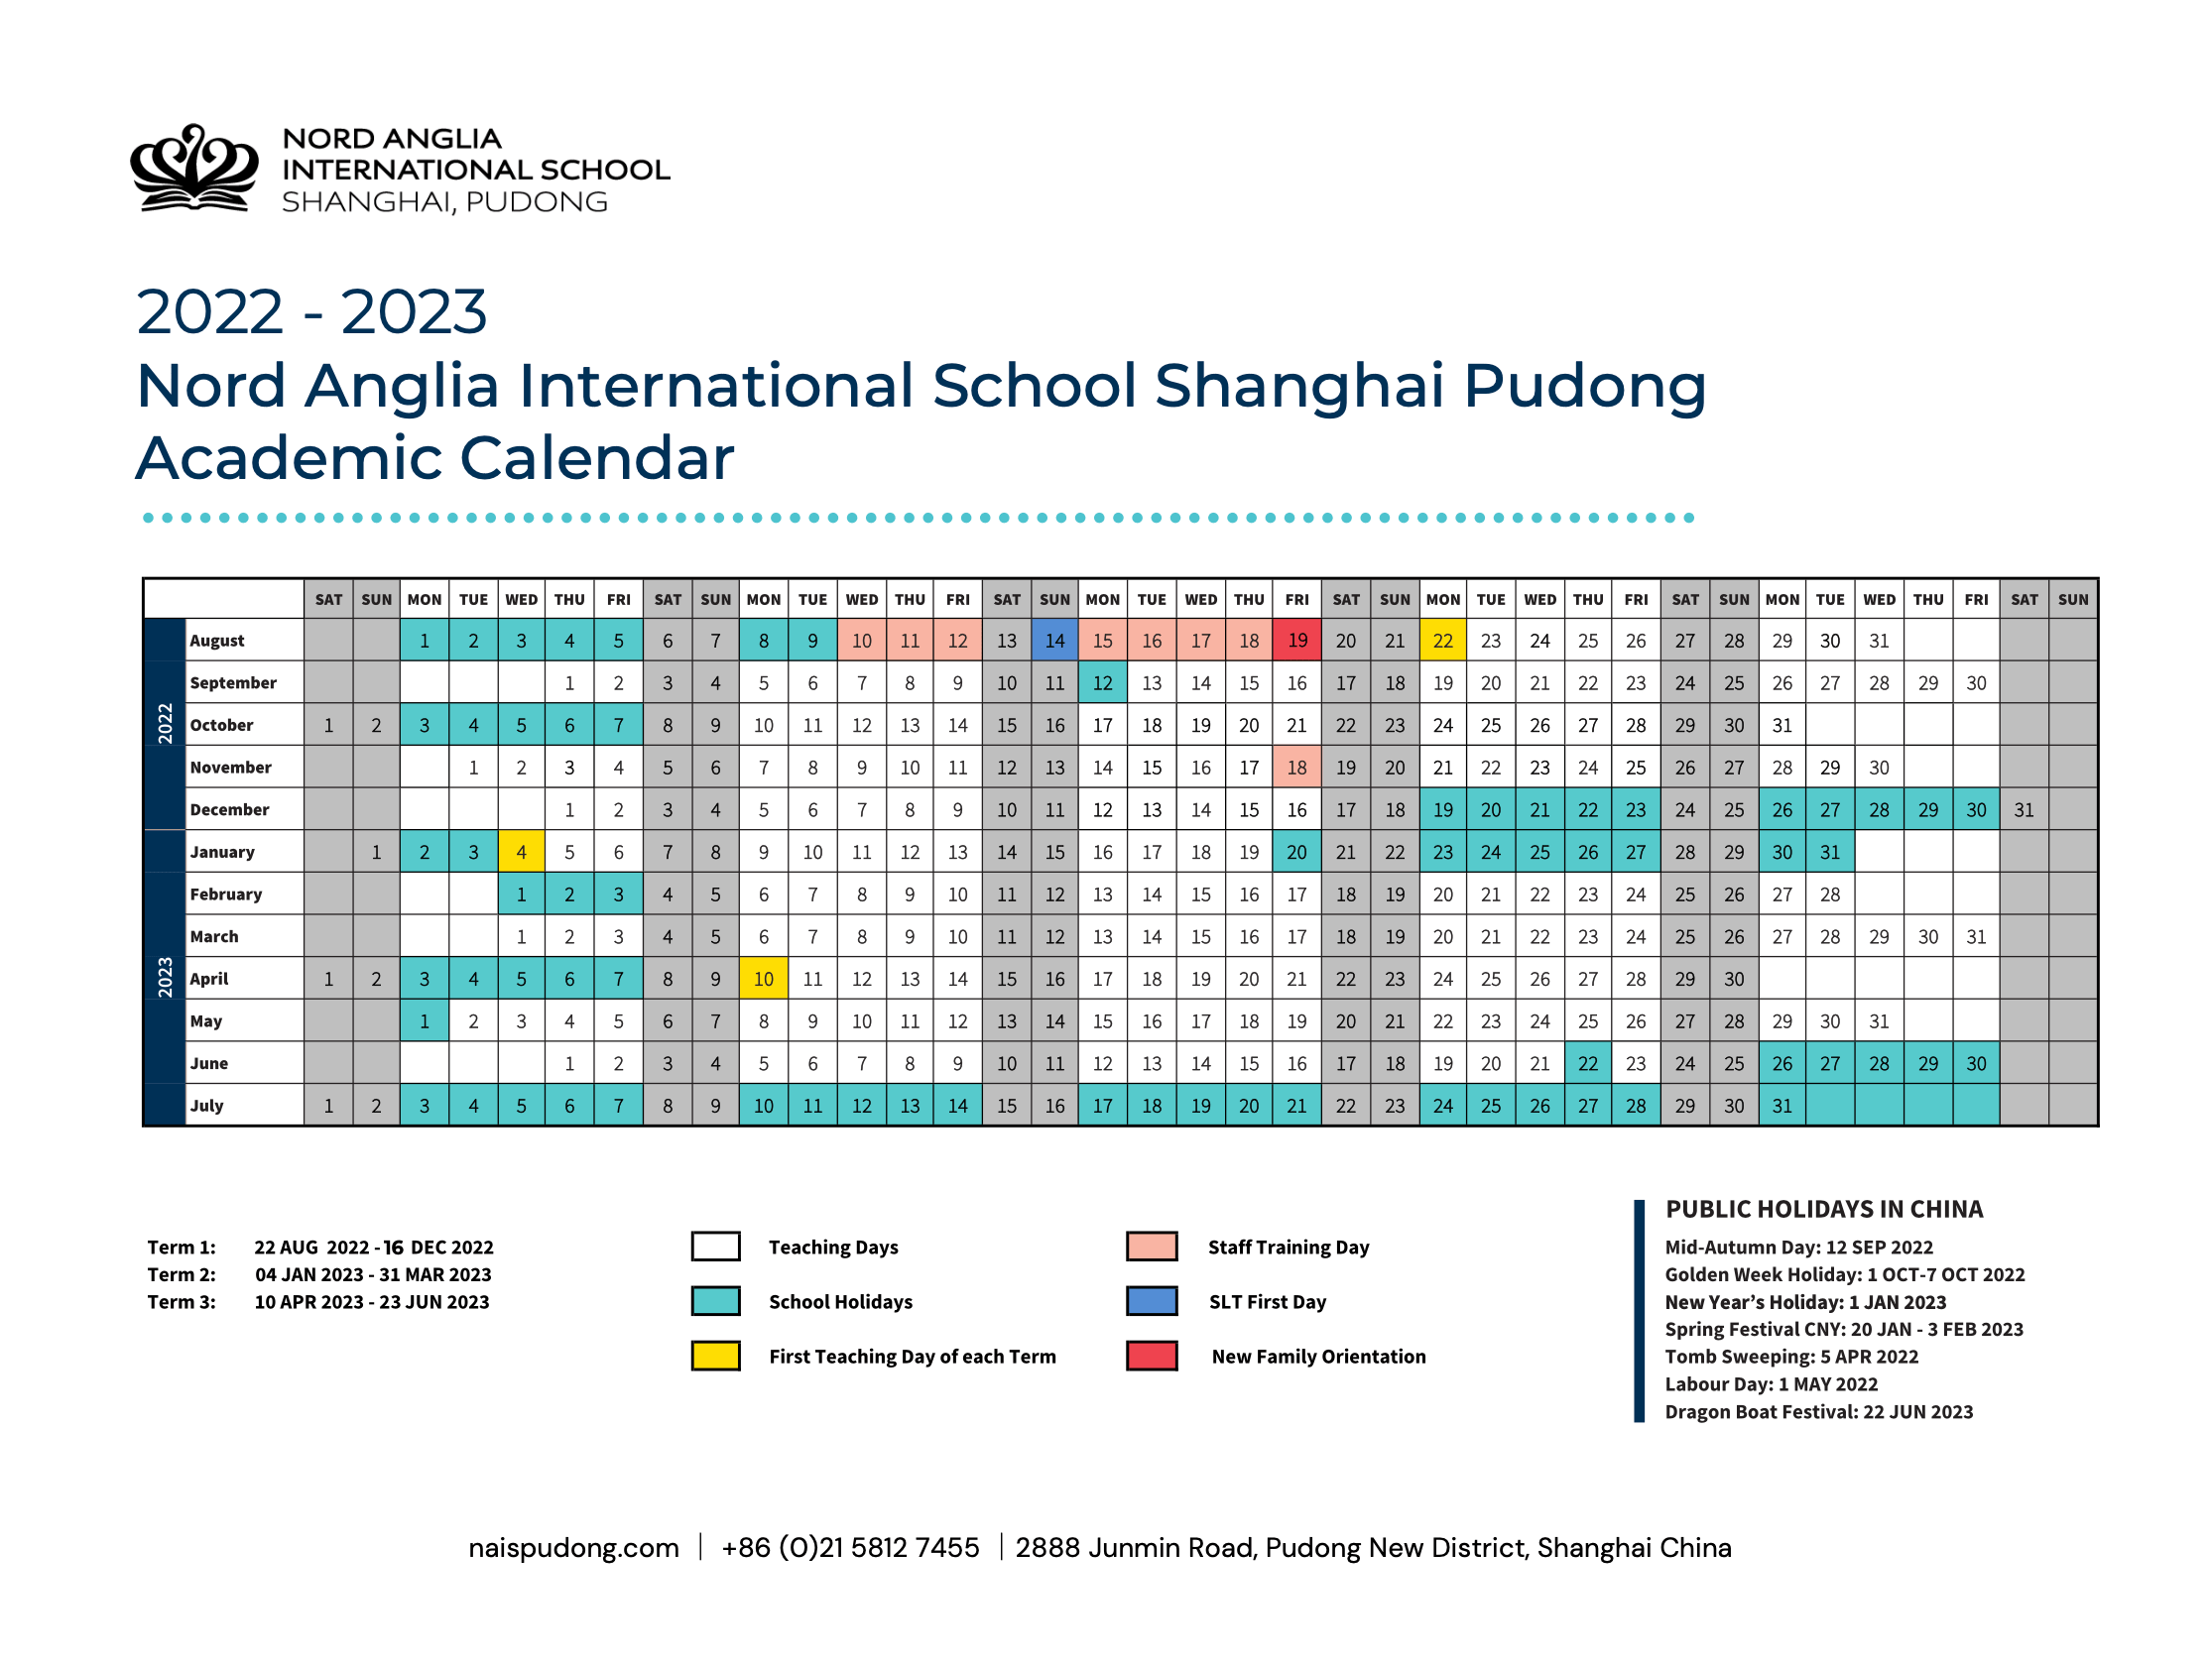 2022-2023 NAIS Pudong Academic Calendar-2022-2023 Calendar